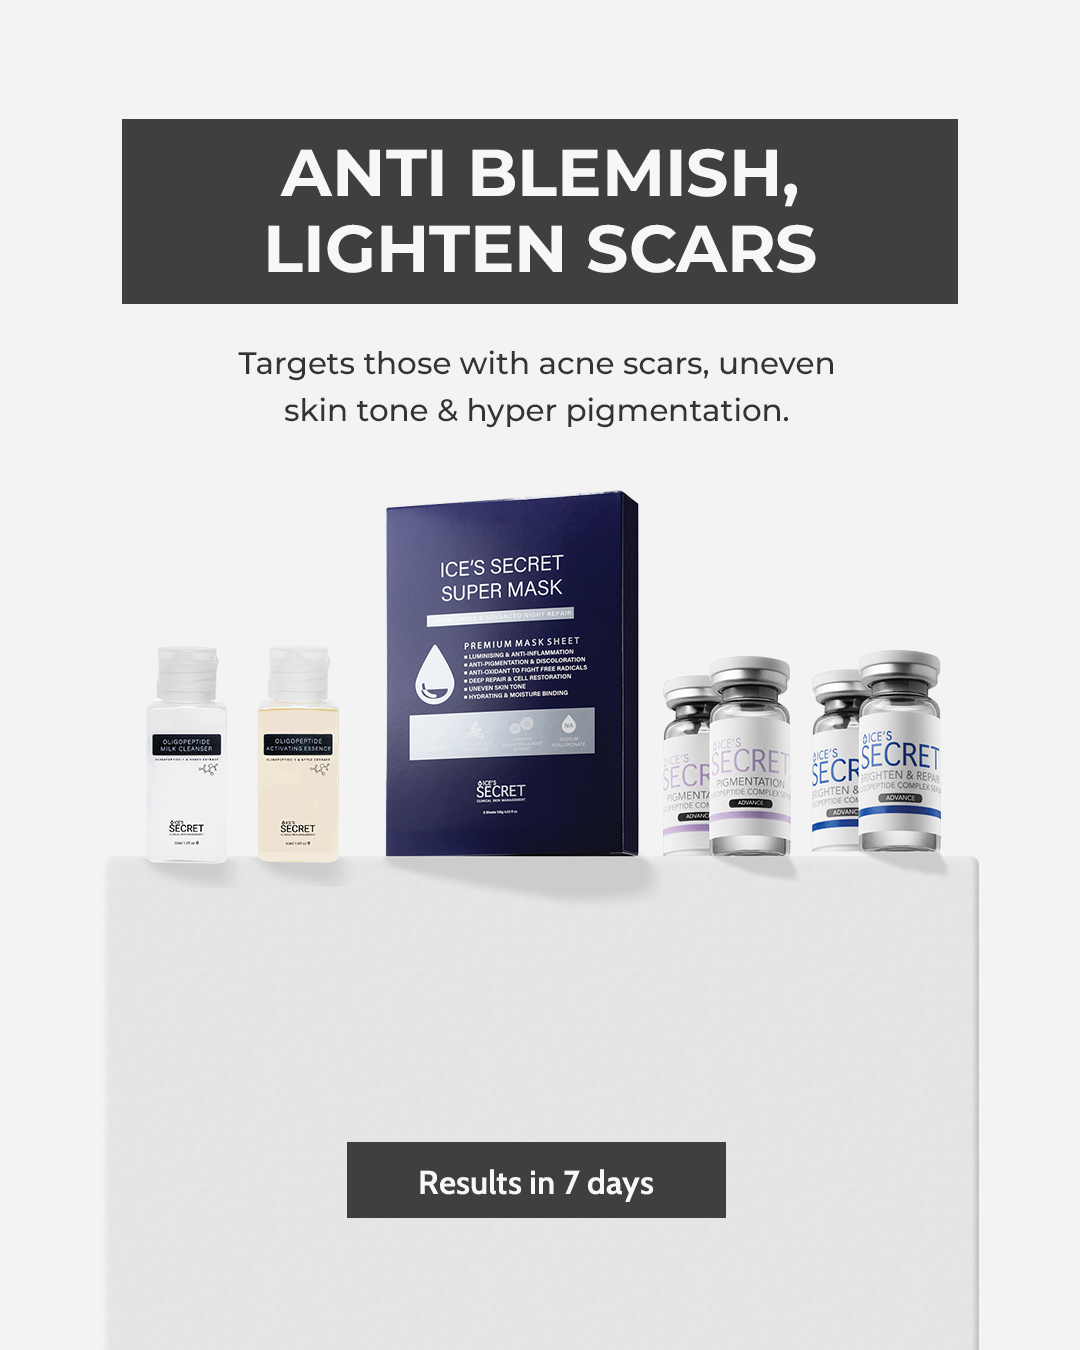 Anti-Blemish, Lighten Scars Kit